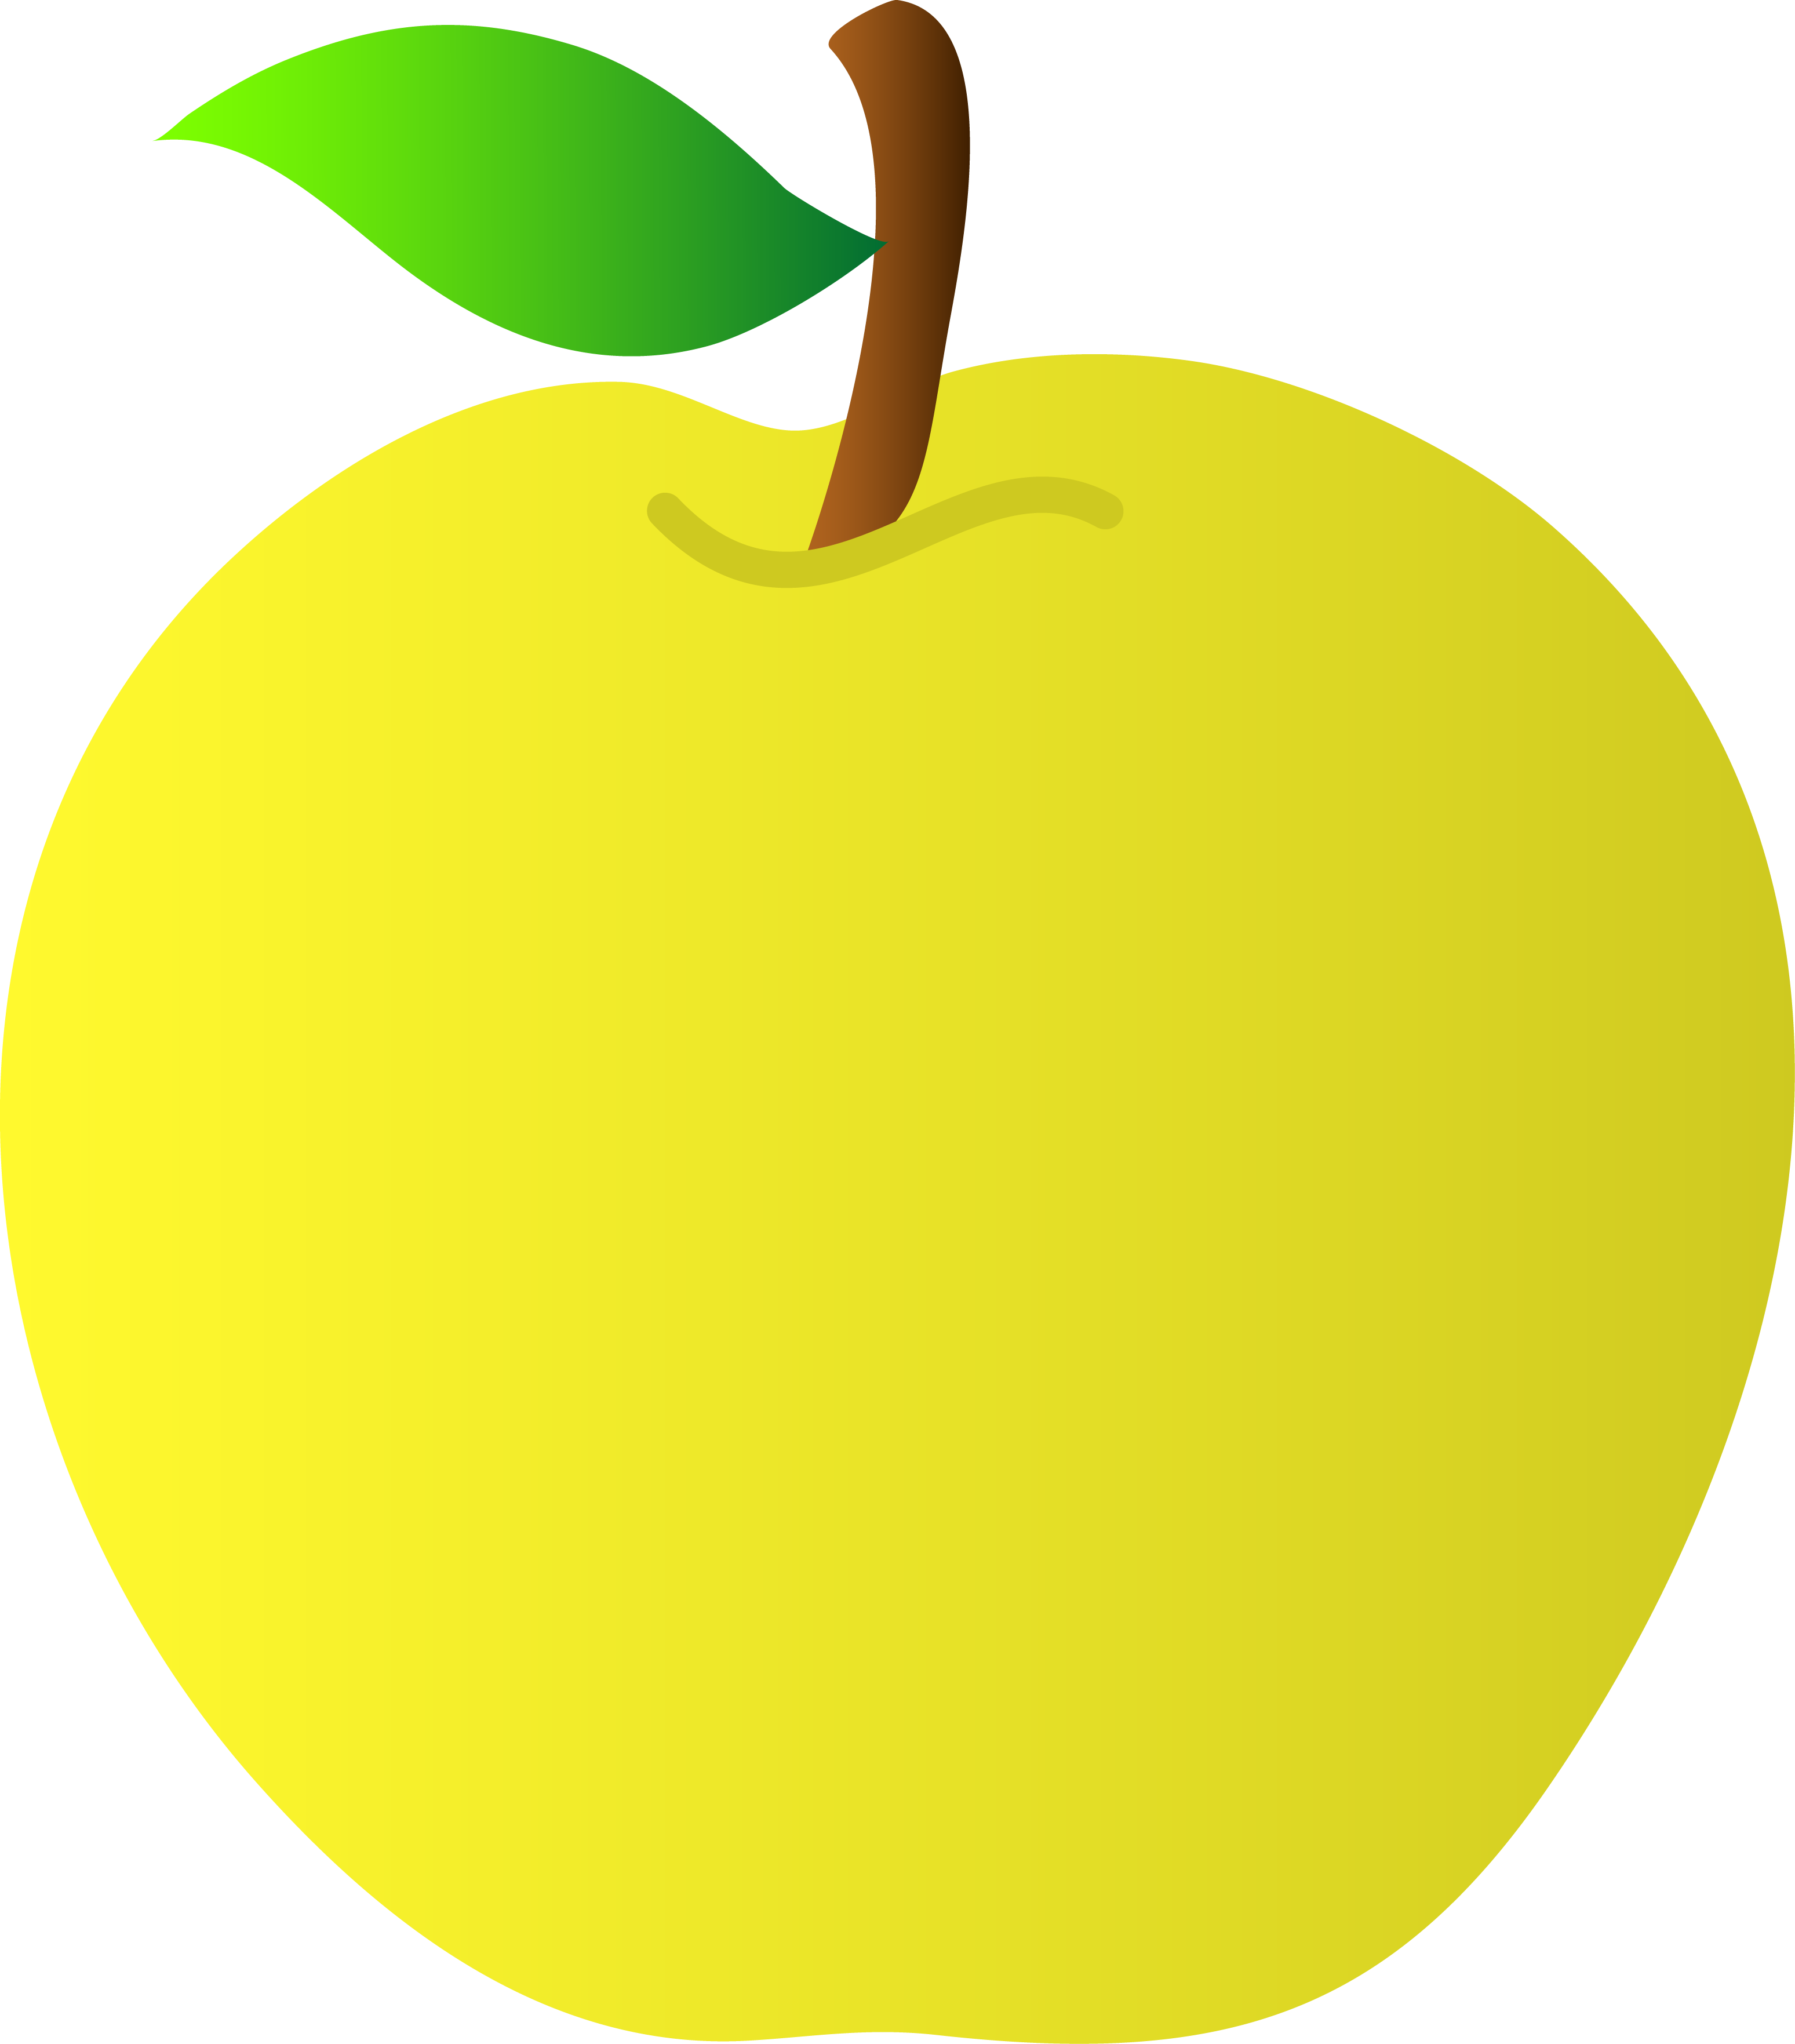 Yellow Apple Vector Art.